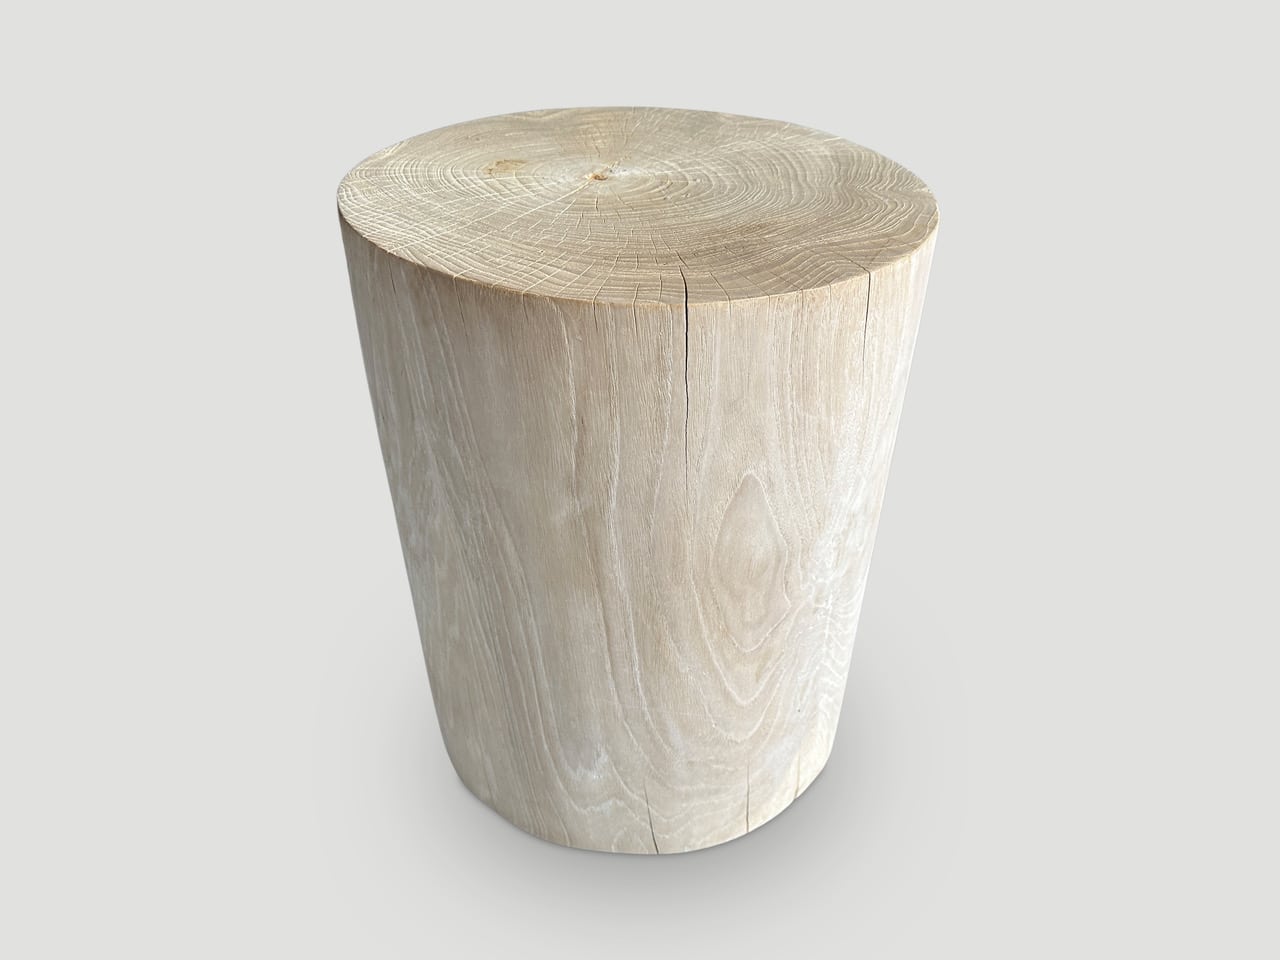 Reclaimed teak wood cylinder side table or stool